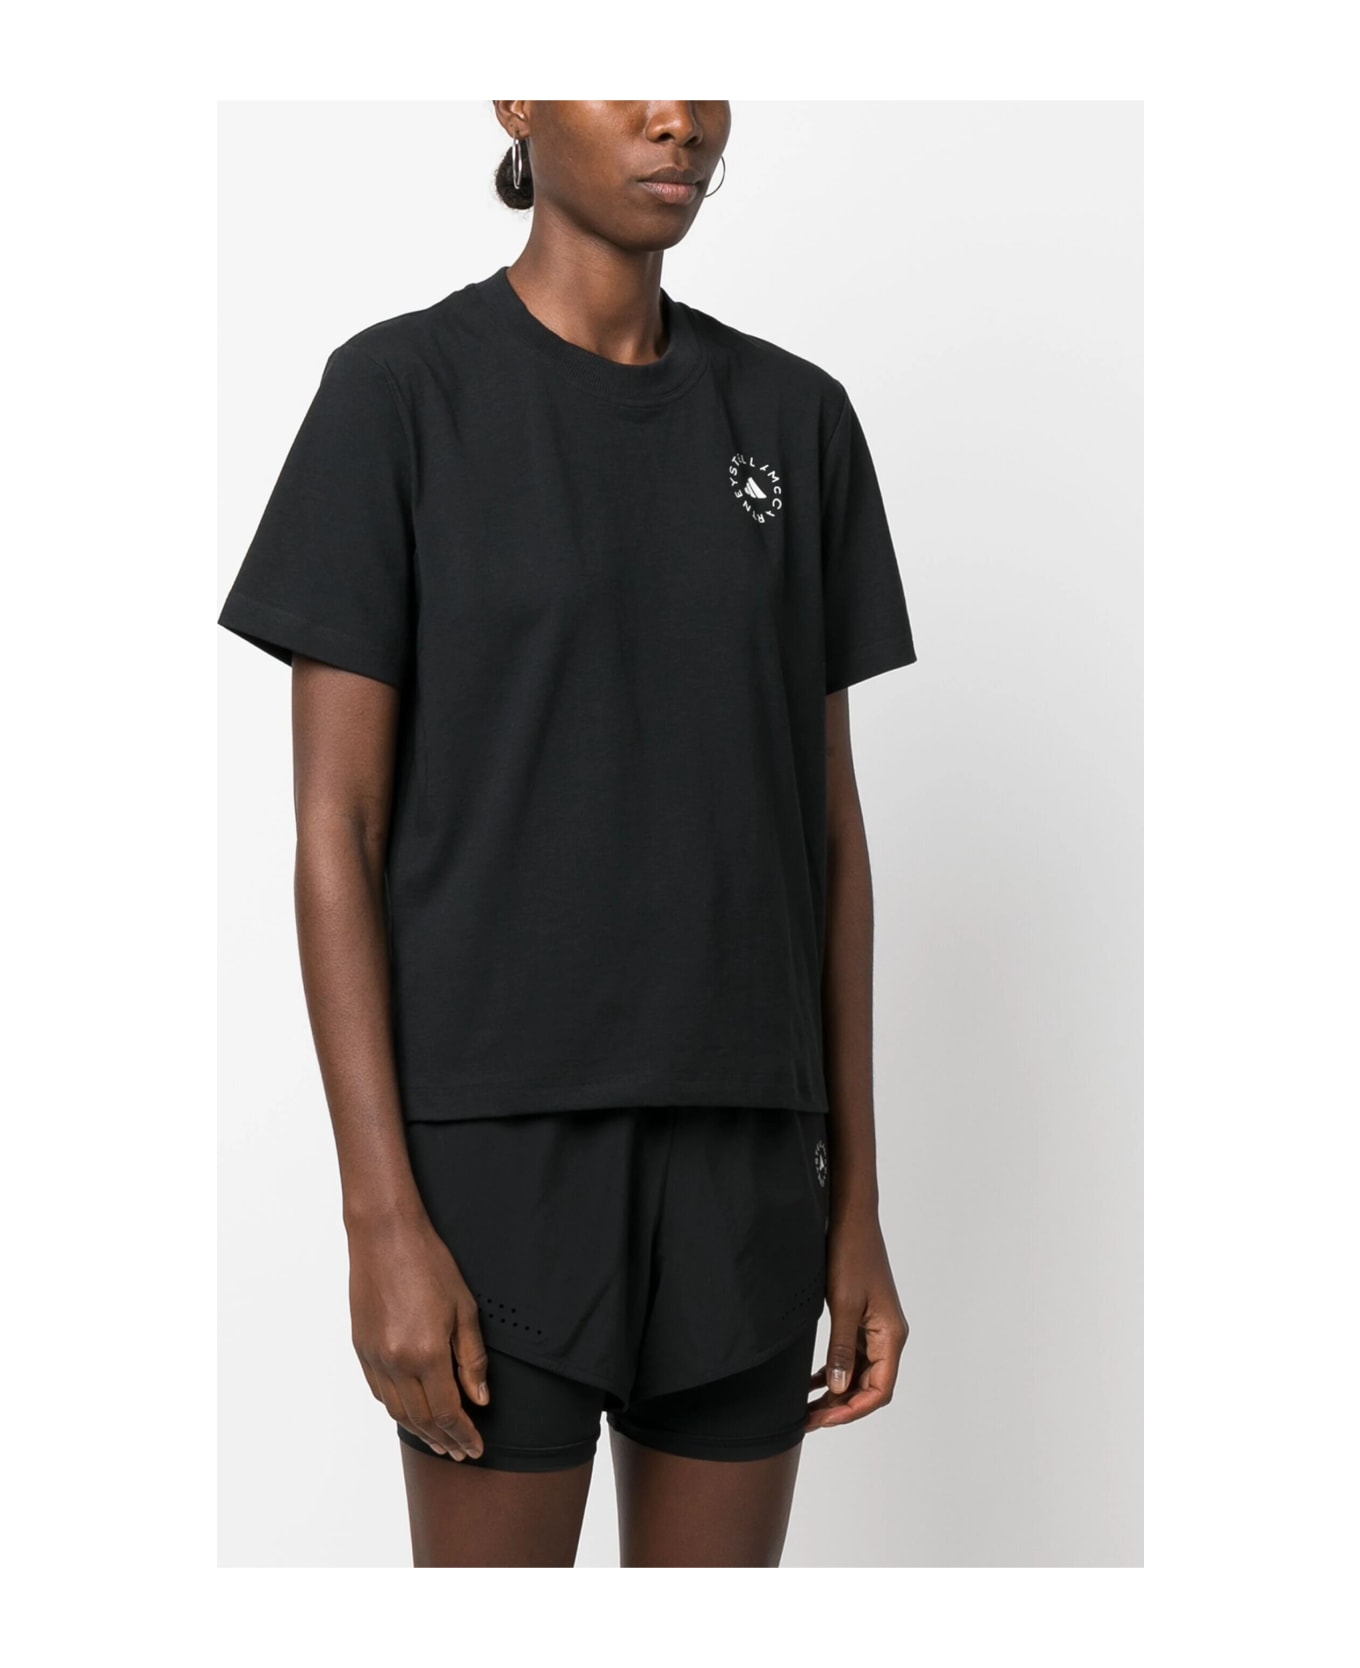 Adidas by Stella McCartney T Shirt - Black Tシャツ